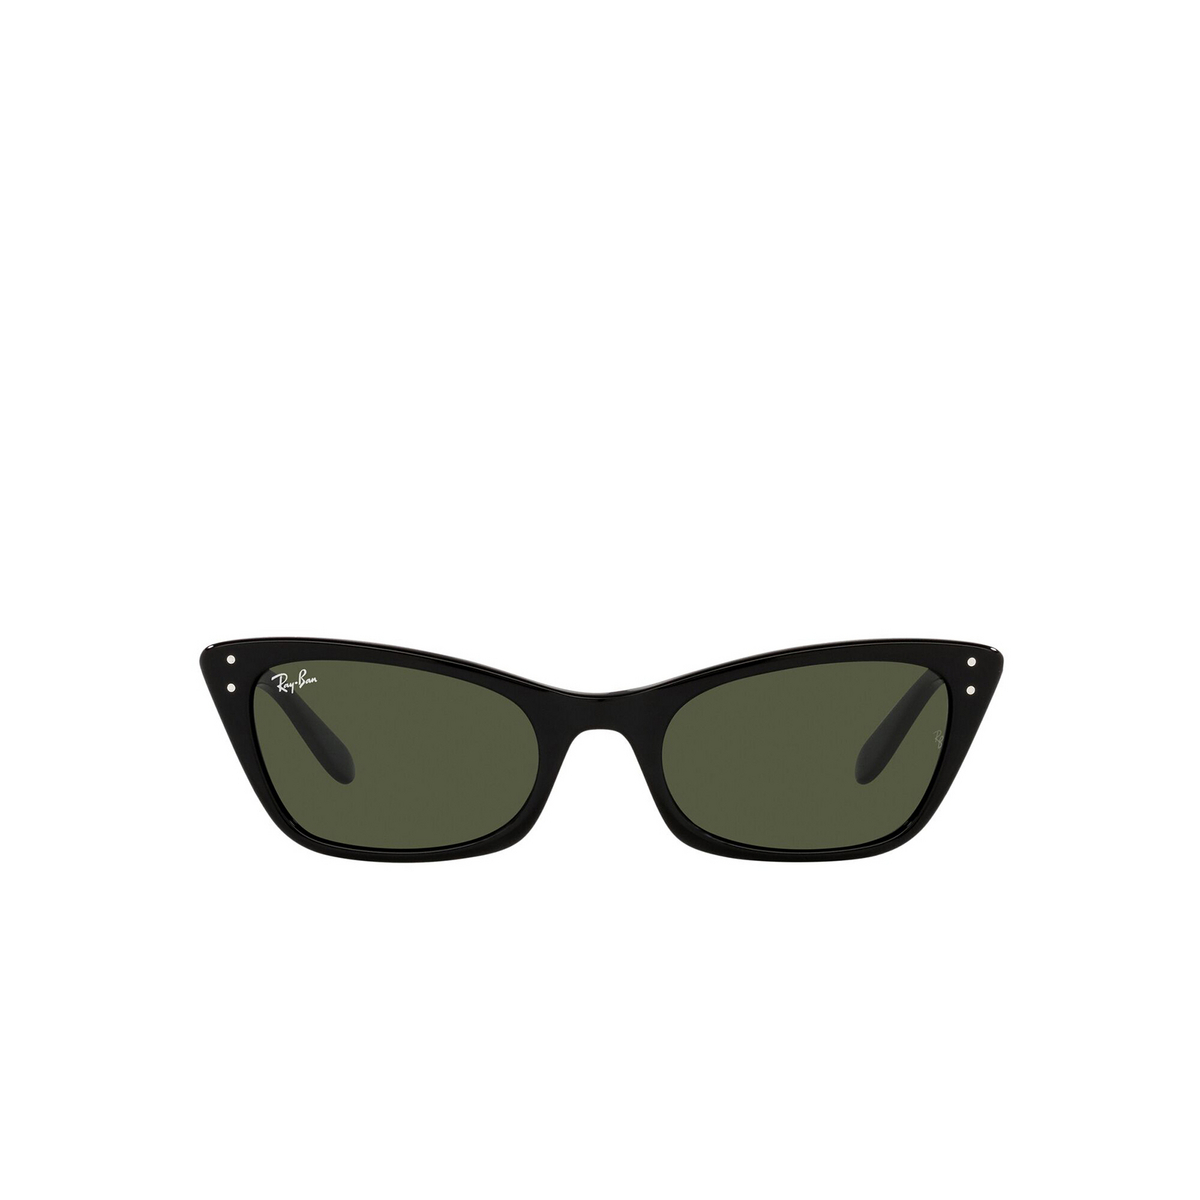 Ray-Ban LADY BURBANK Sunglasses 901/31 Black - front view